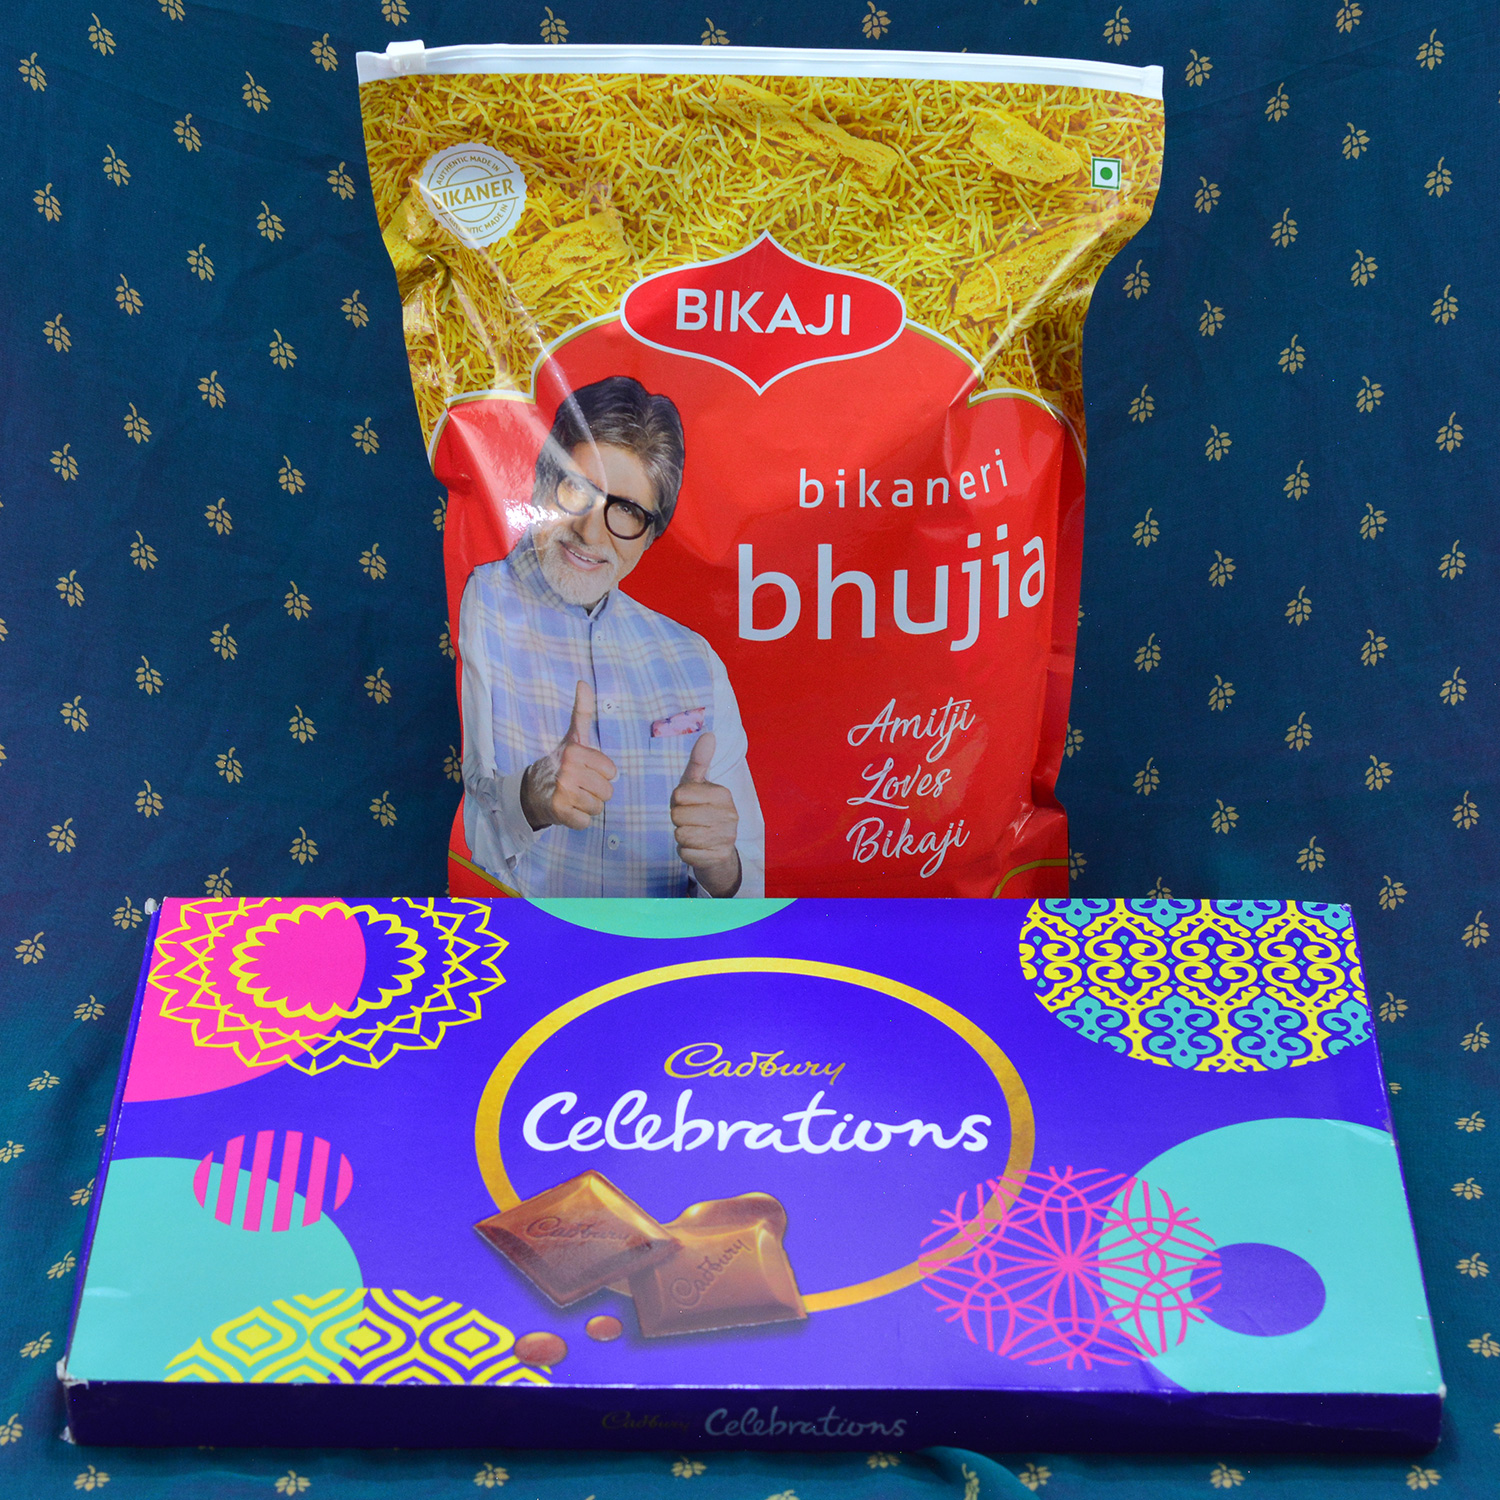 yum-yum Cadbury Celebrations with Bikaji Bikaneri Bhujia